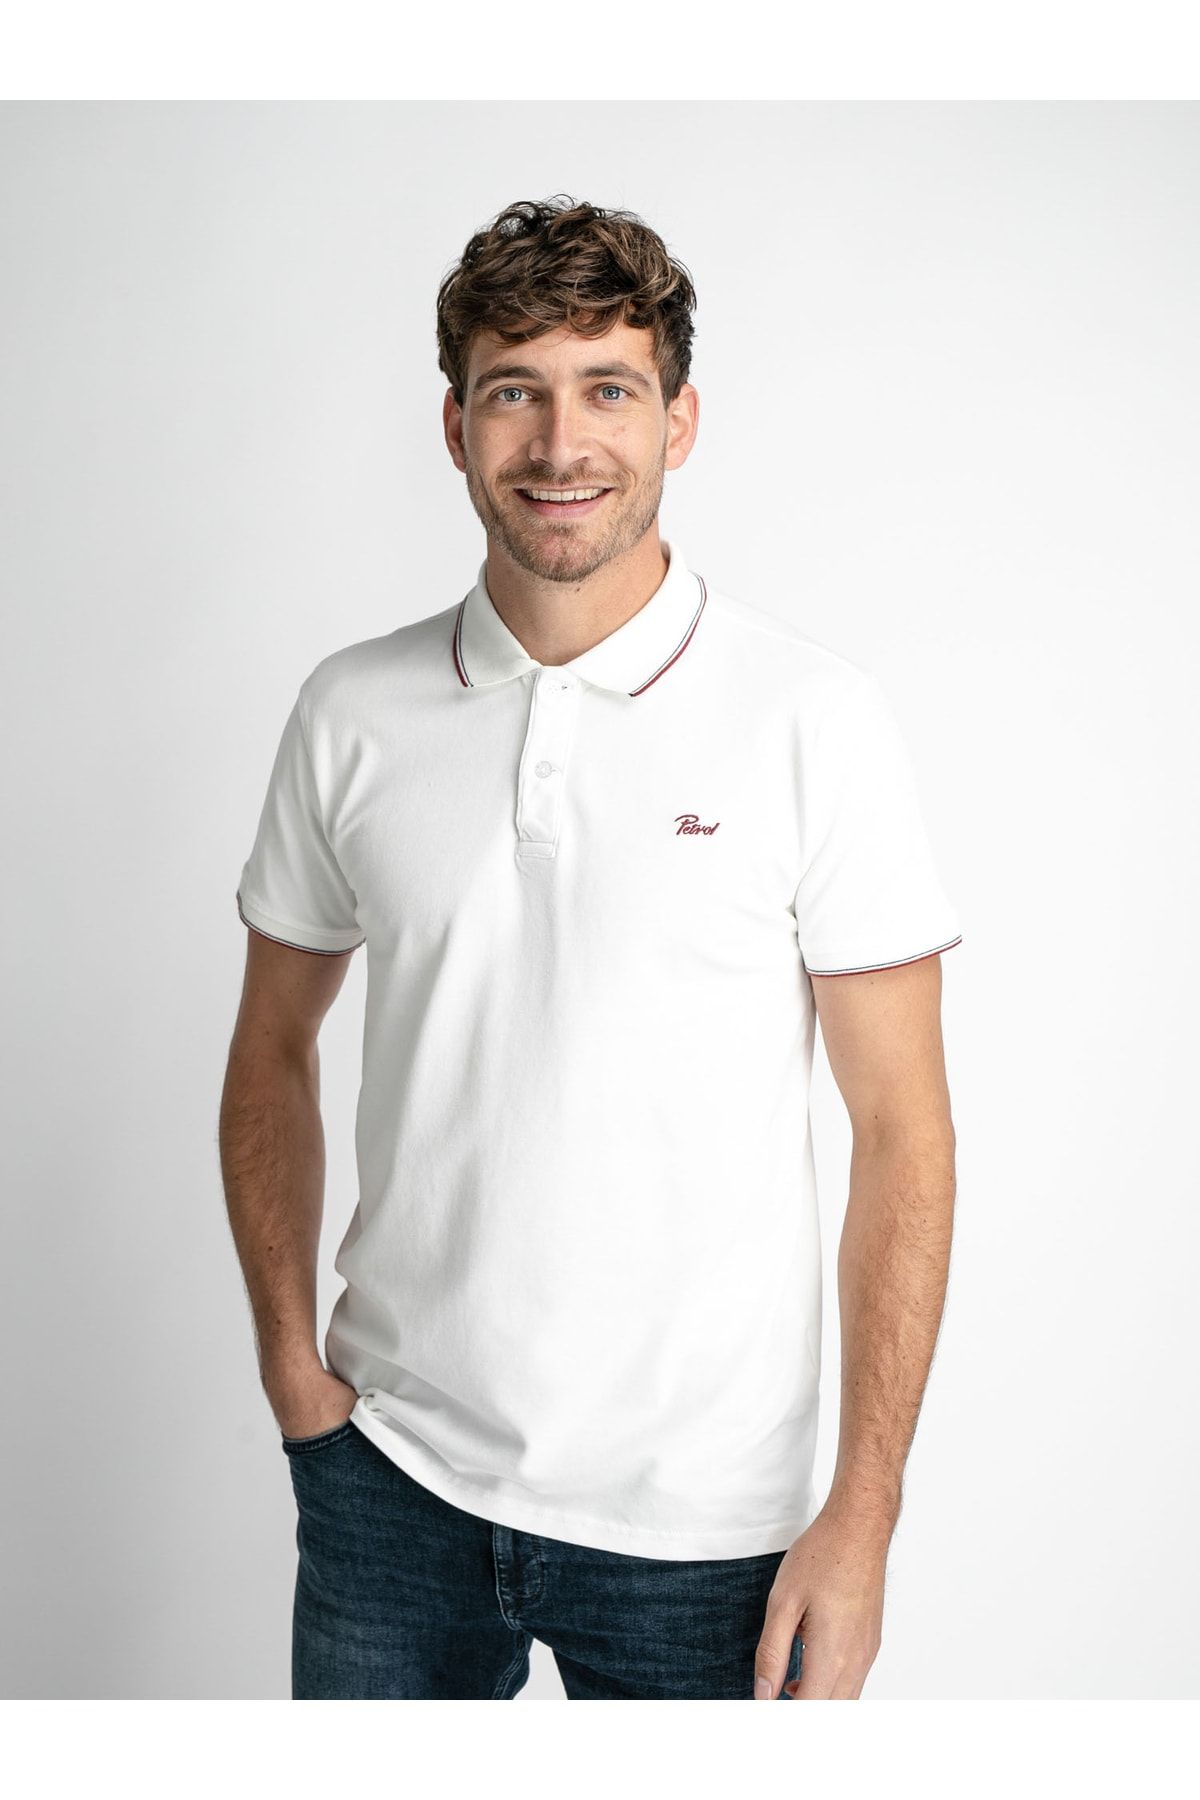 T-shirt Industries White - fit - Trendyol - Petrol Polo Regular